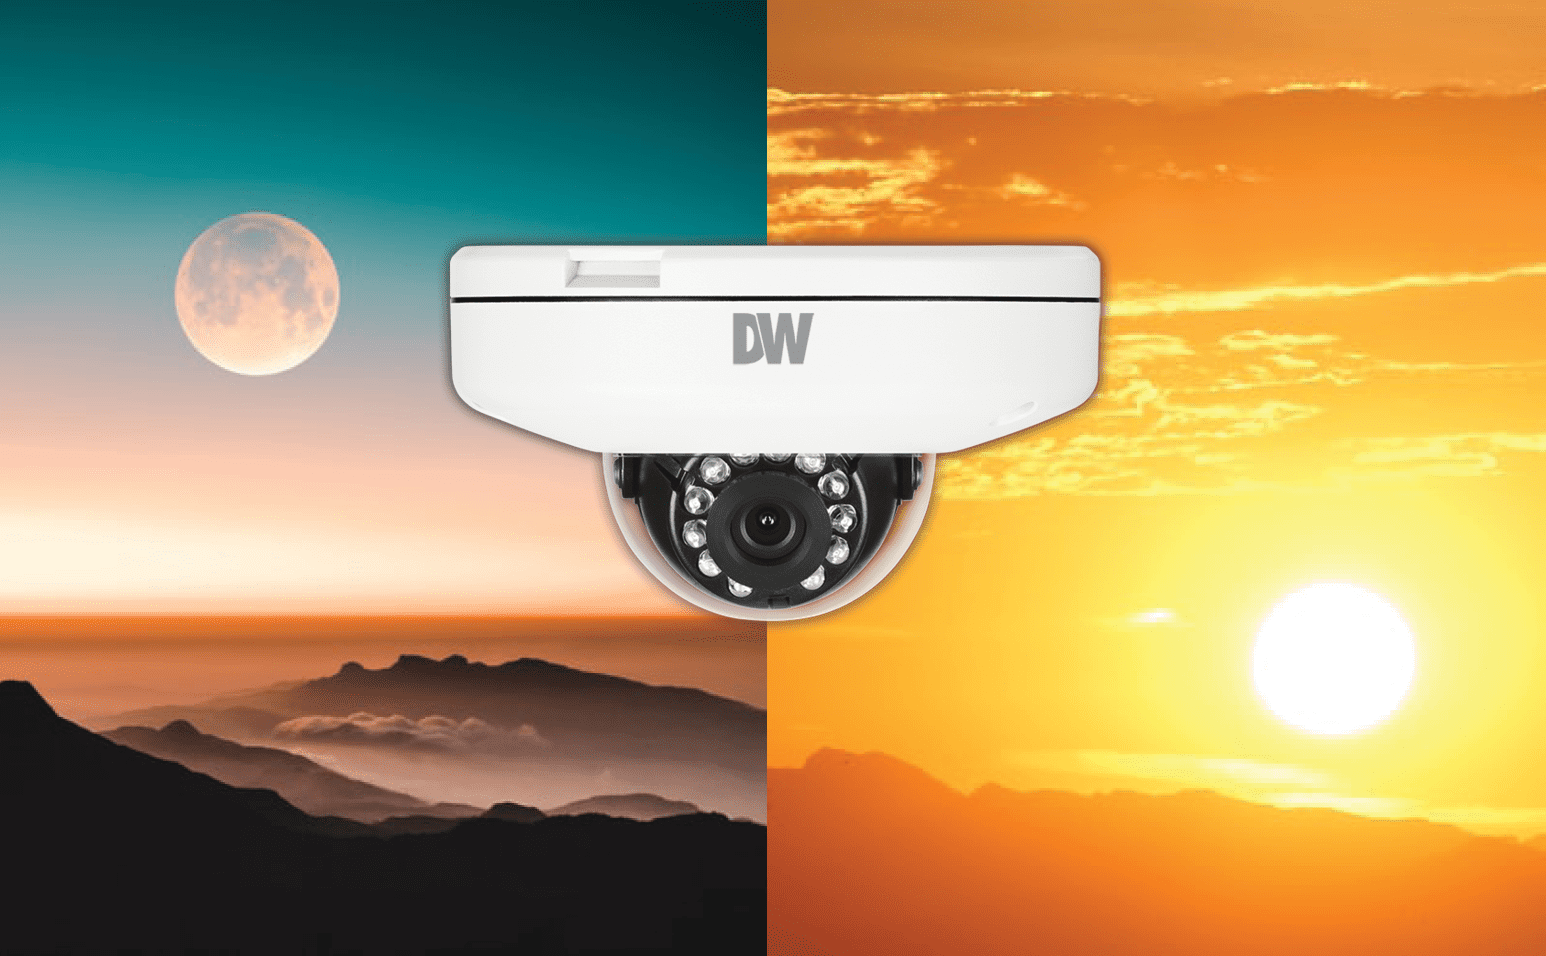 Digital Watchdog dome camera positioned over a half day, half night sky. 